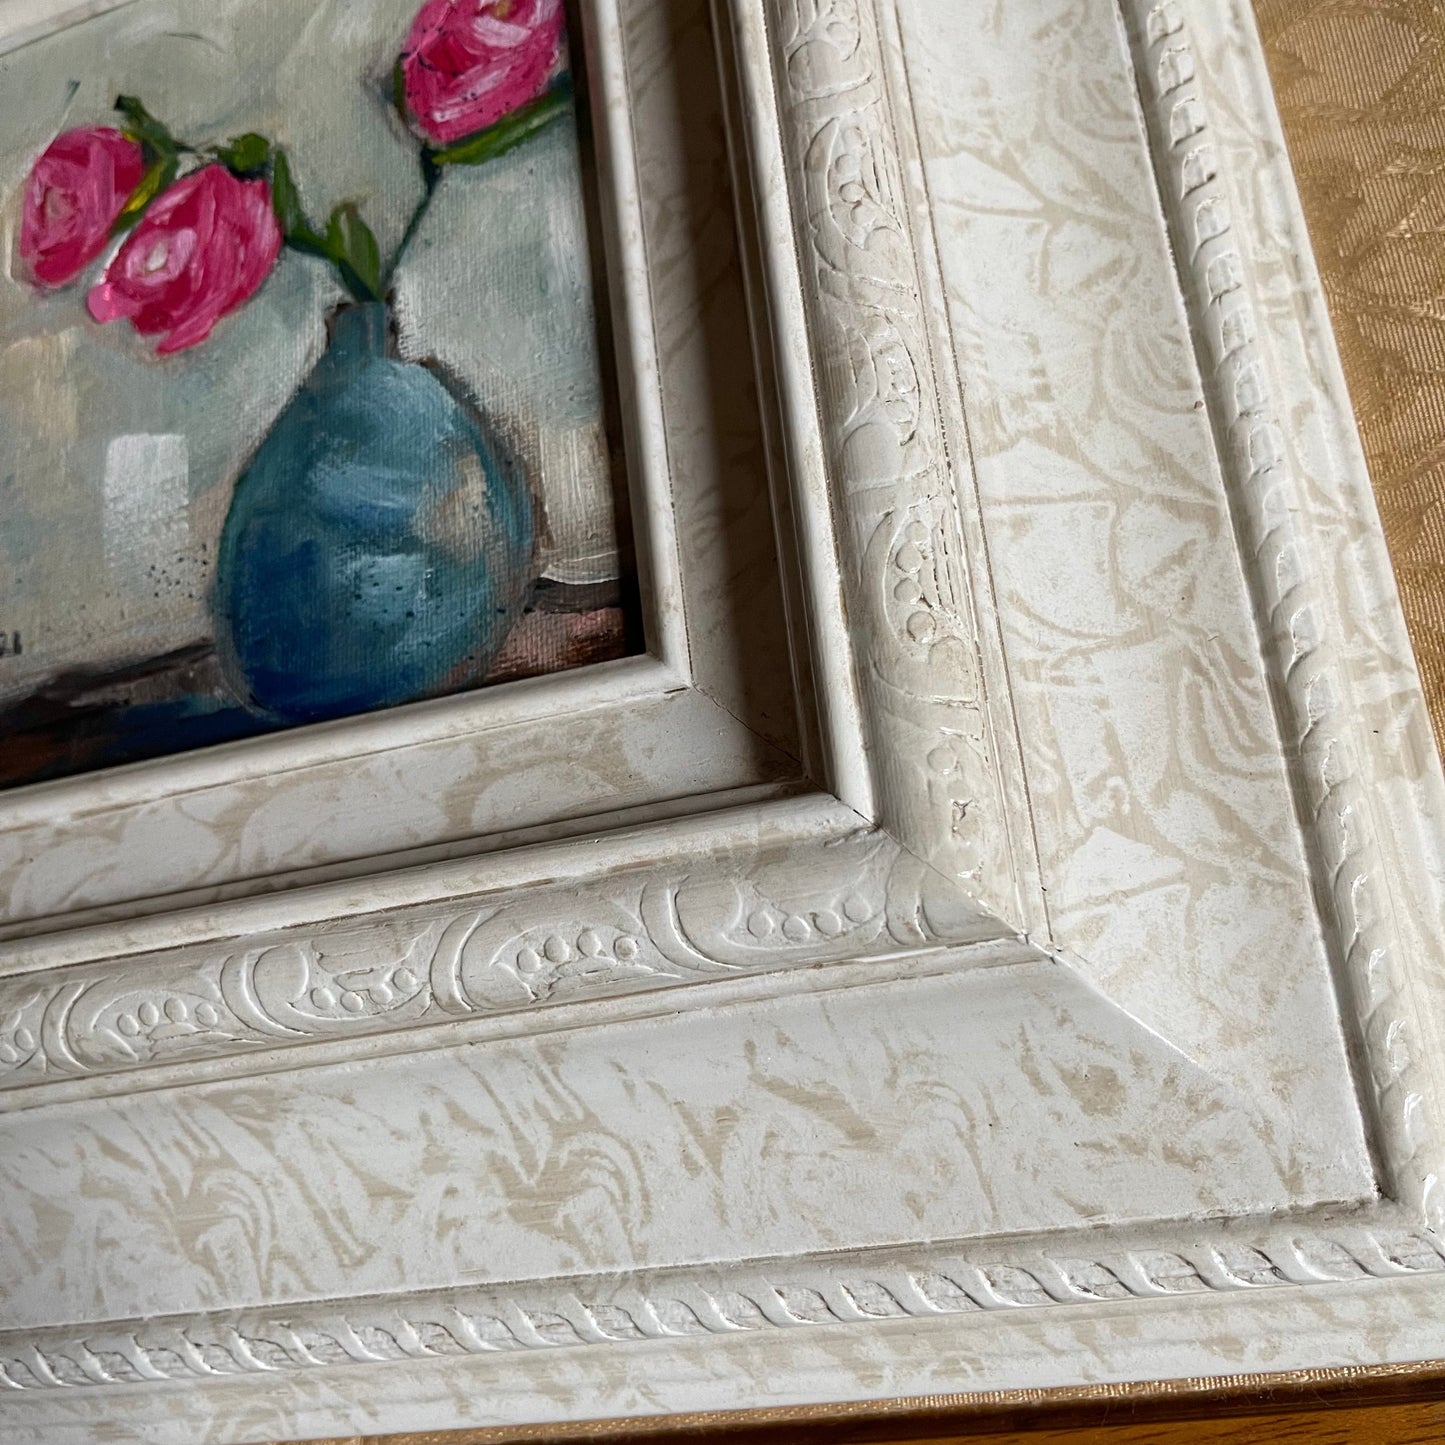 Three Roses Original Oil Painting Framed